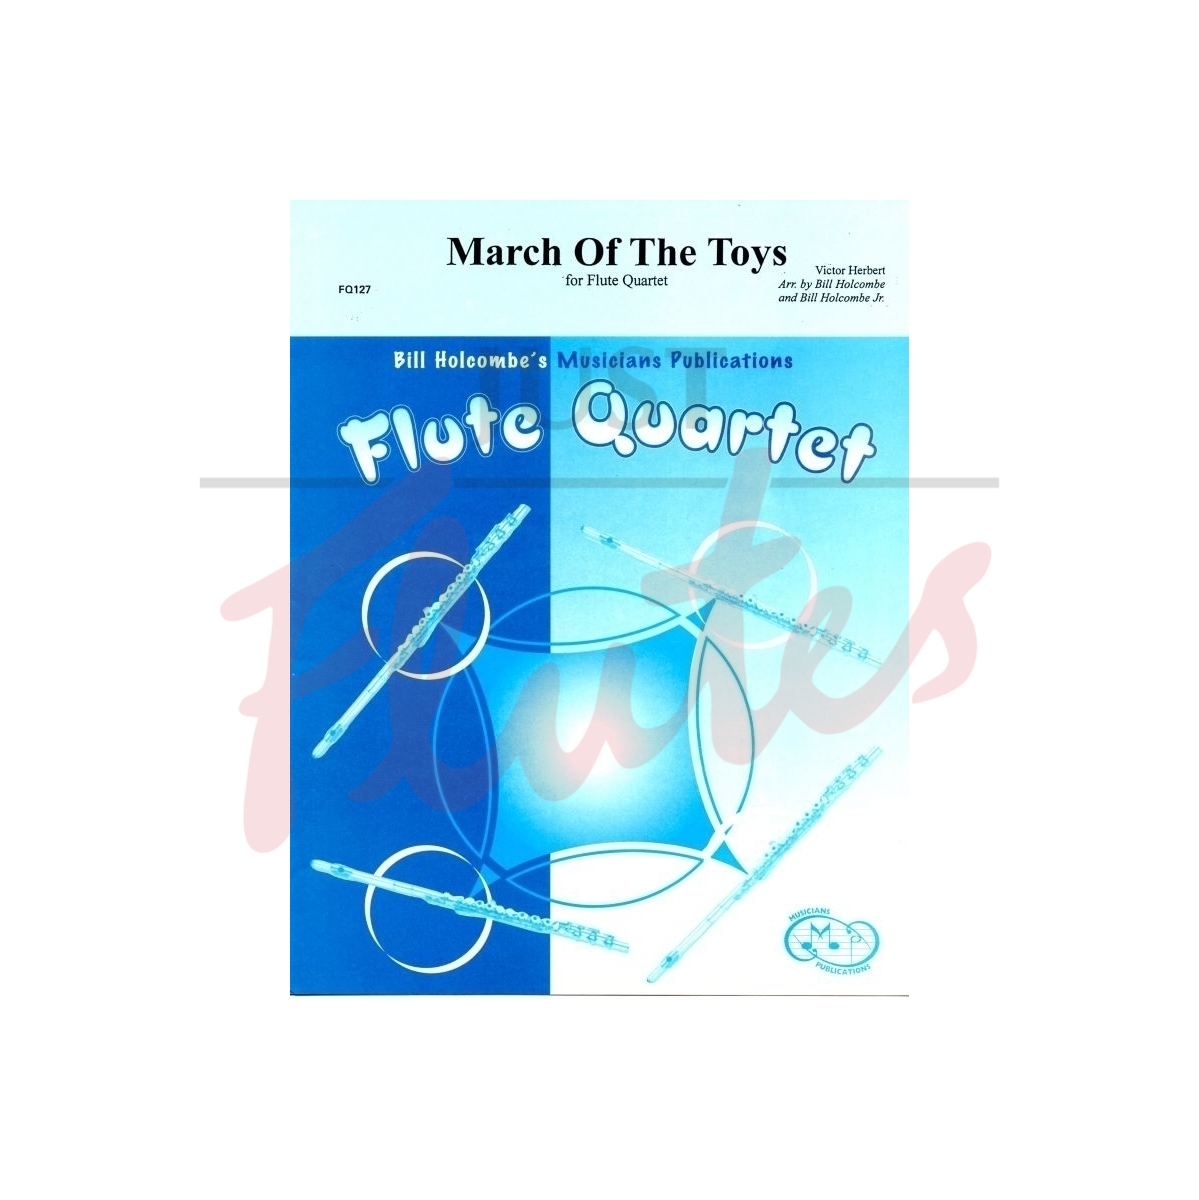 March of the Toys [Flute Quartet]